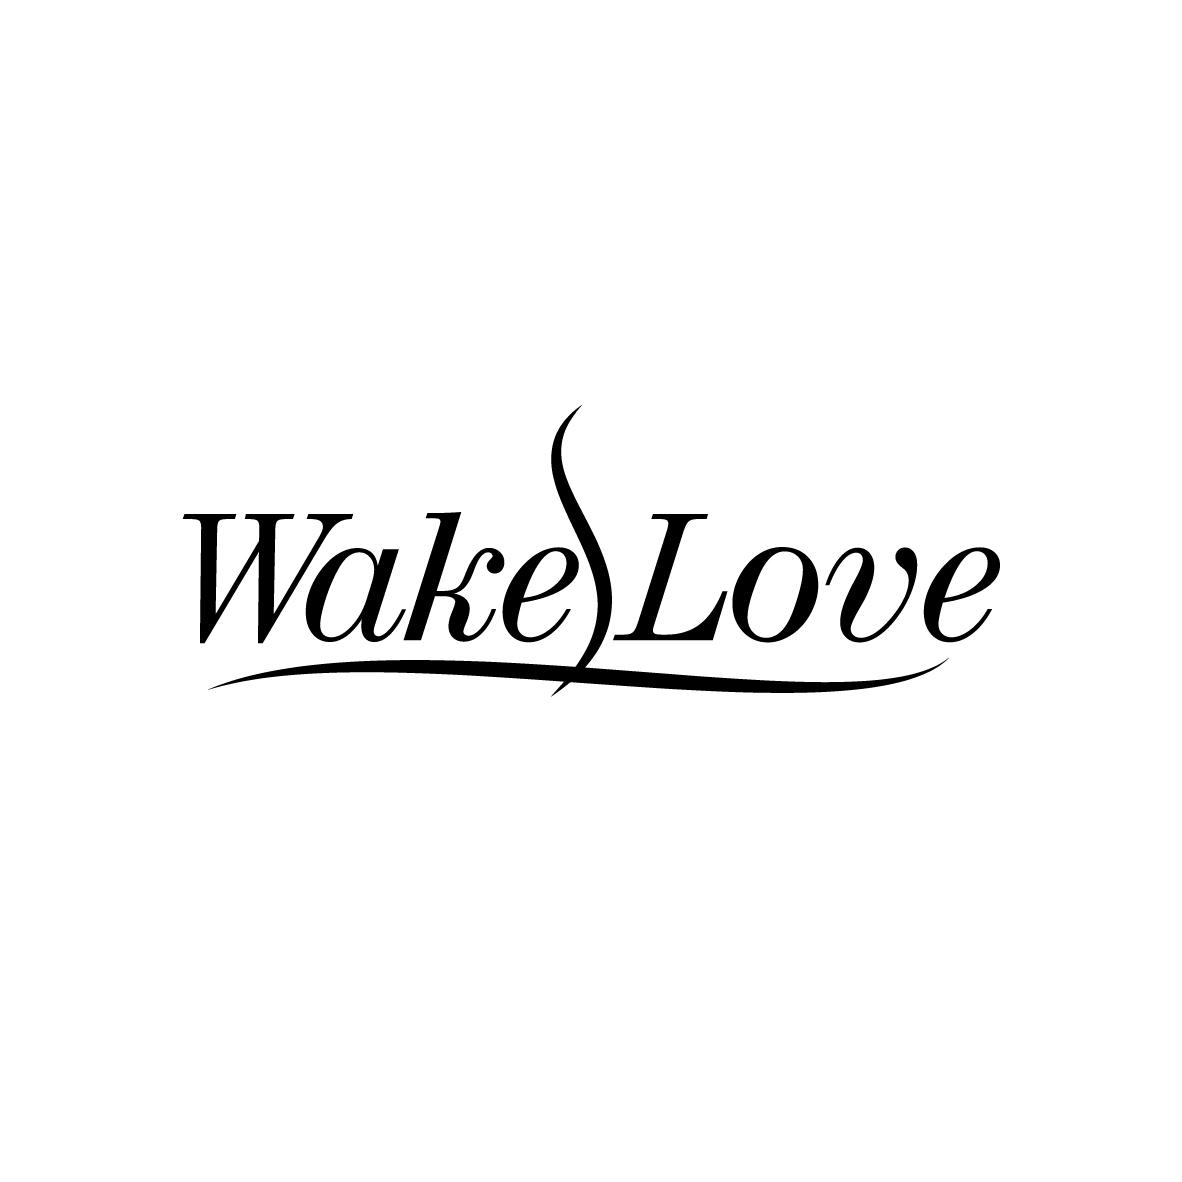 WAKE LOVE